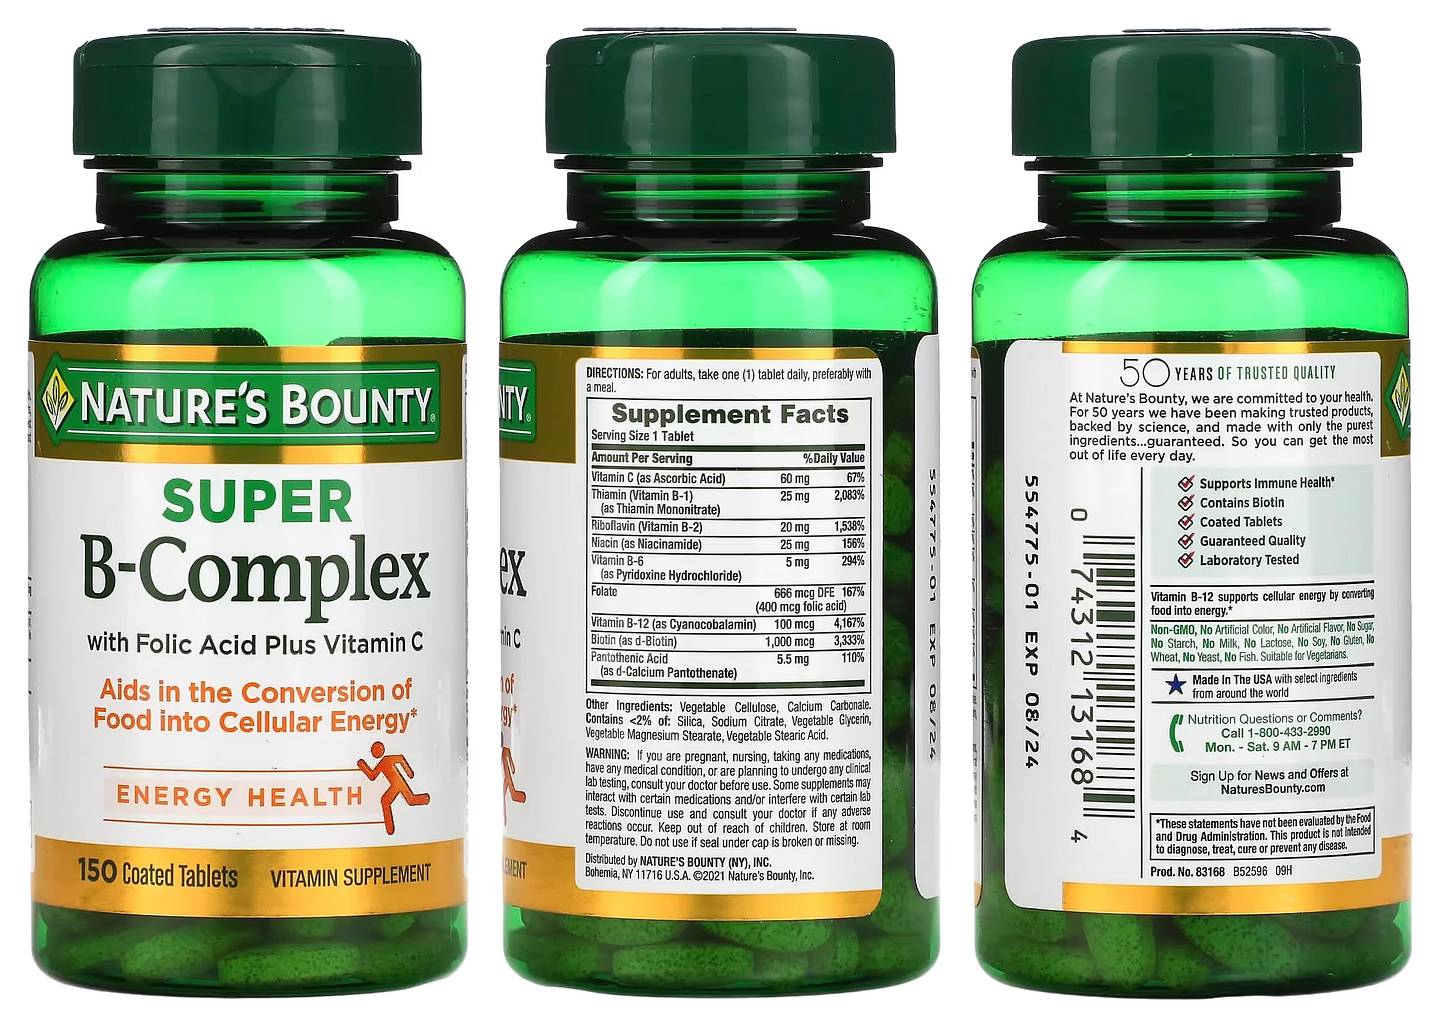 Nature's Bounty, Super B-Complex with Folic Acid Plus Vitamin C packaging